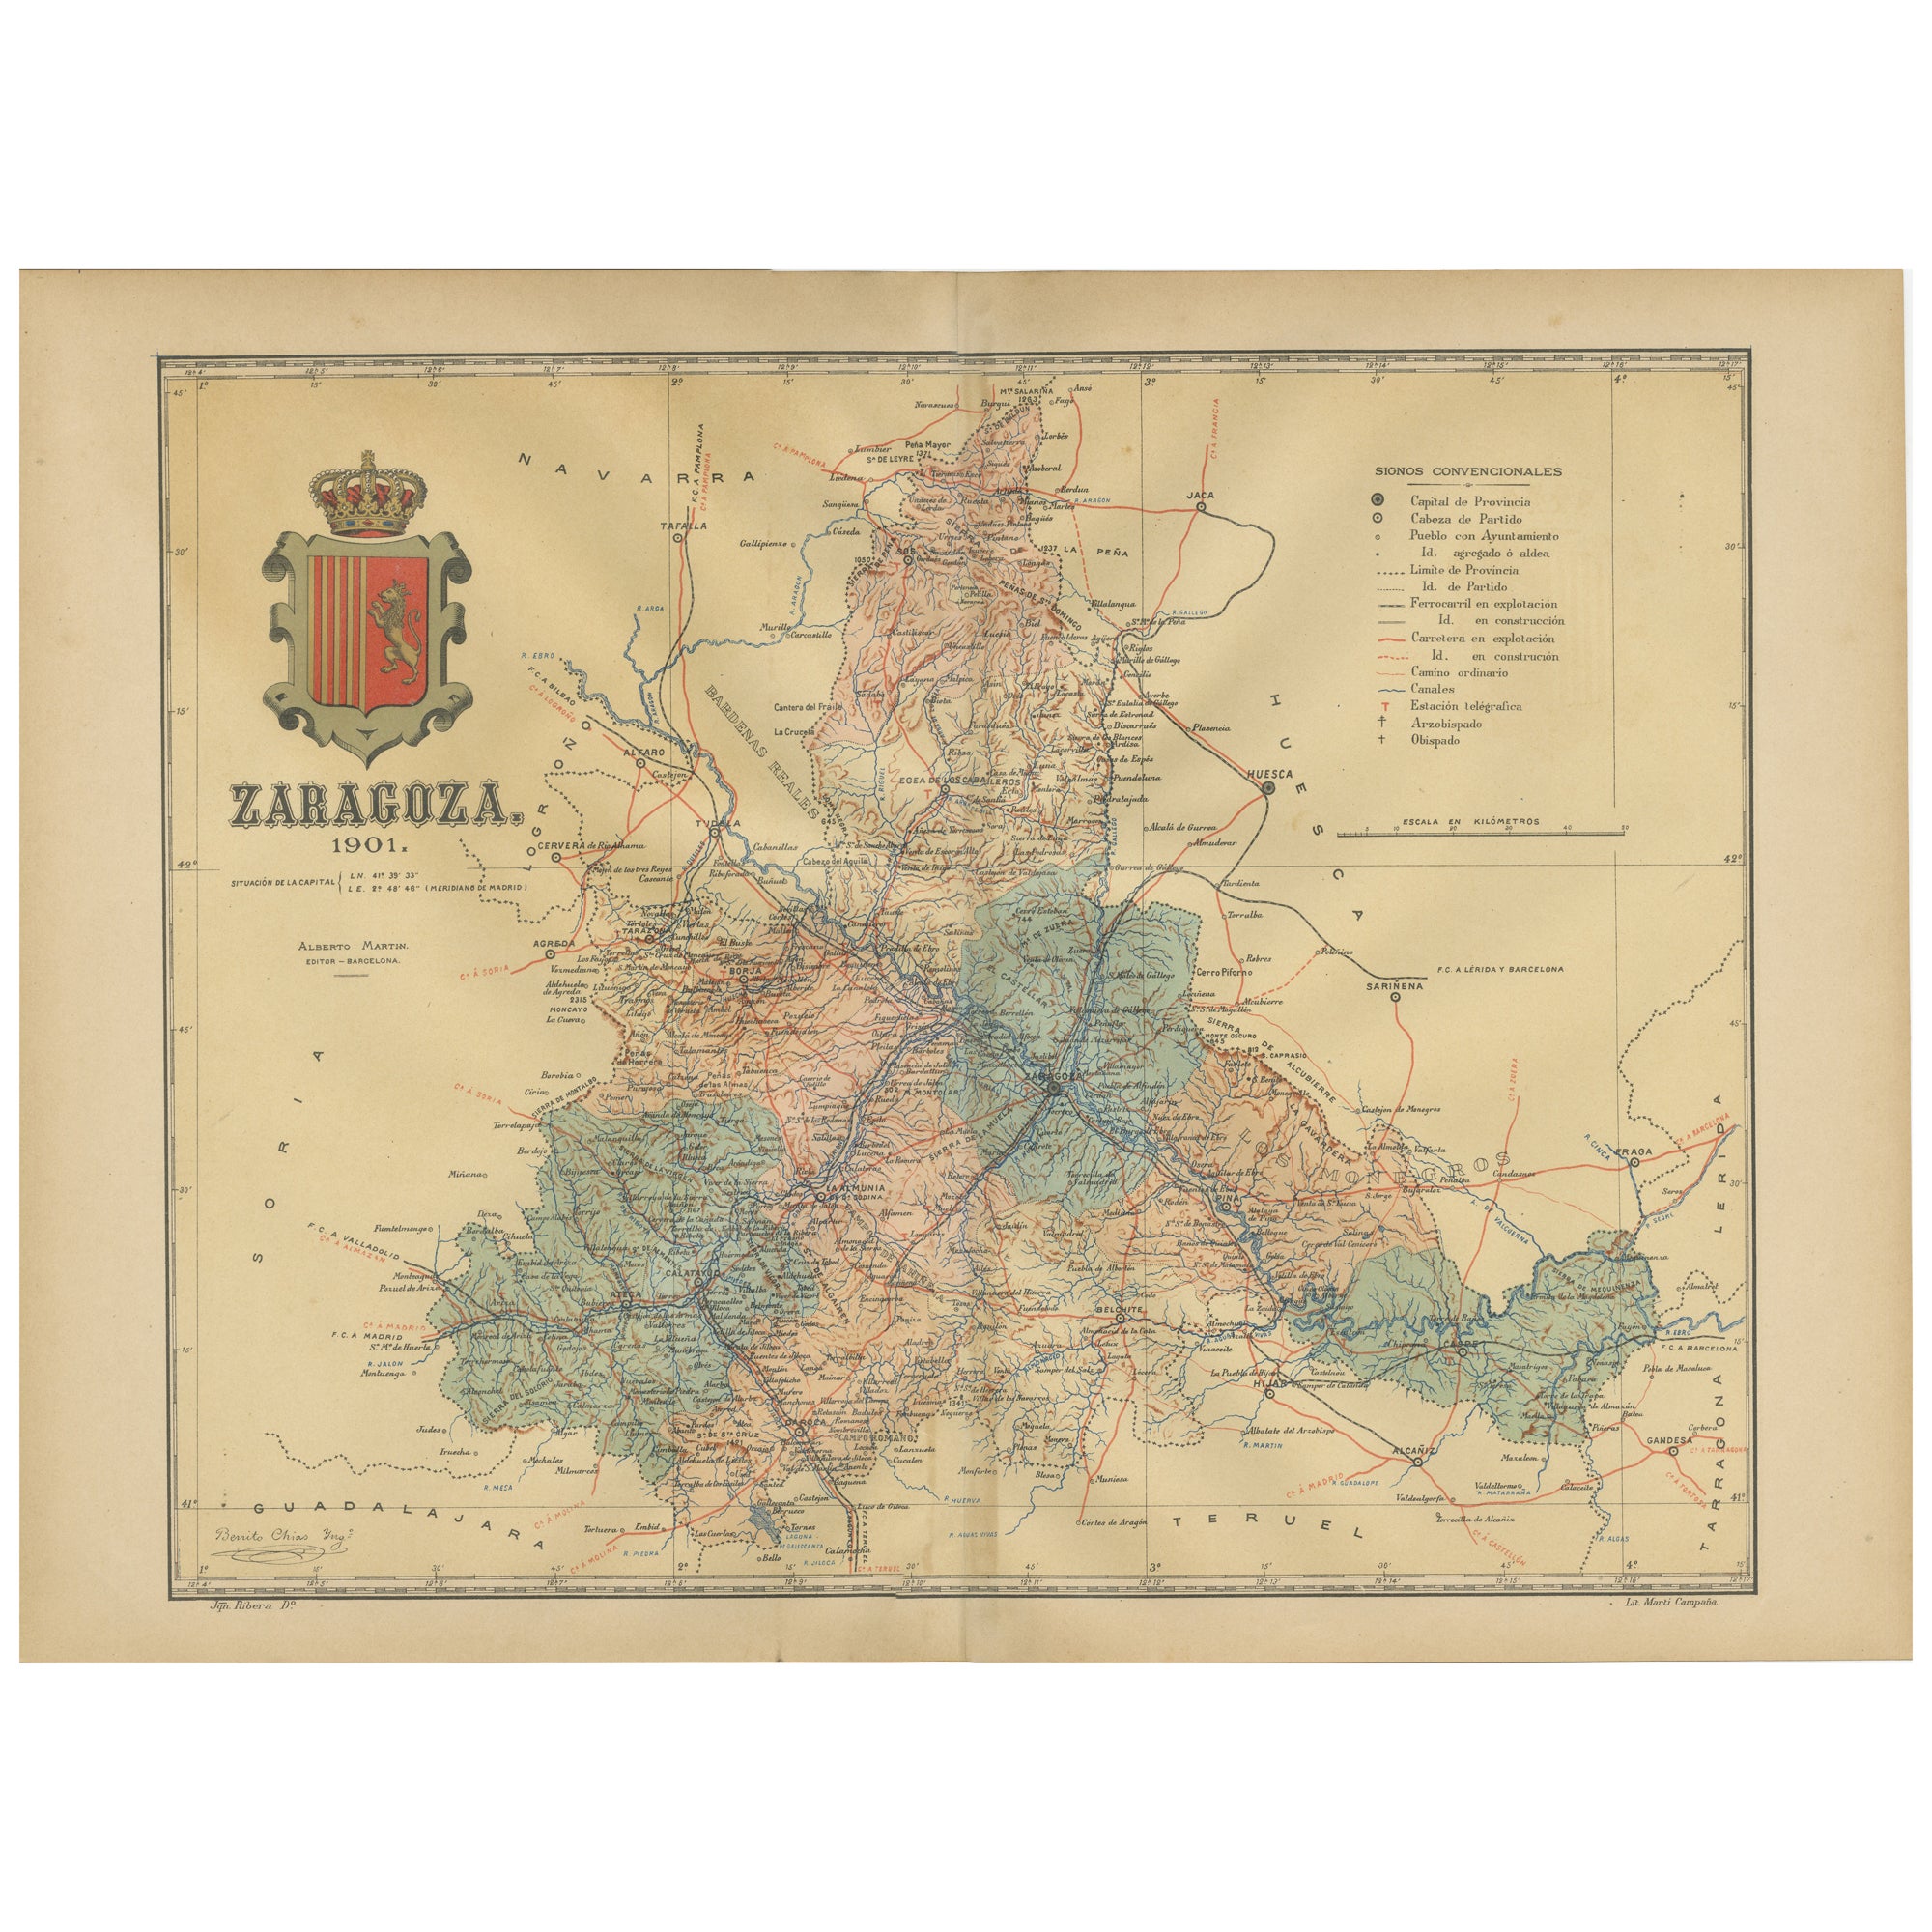 Zaragoza: Crossroads of Heritage - The 1901 Cartographic Chronicle